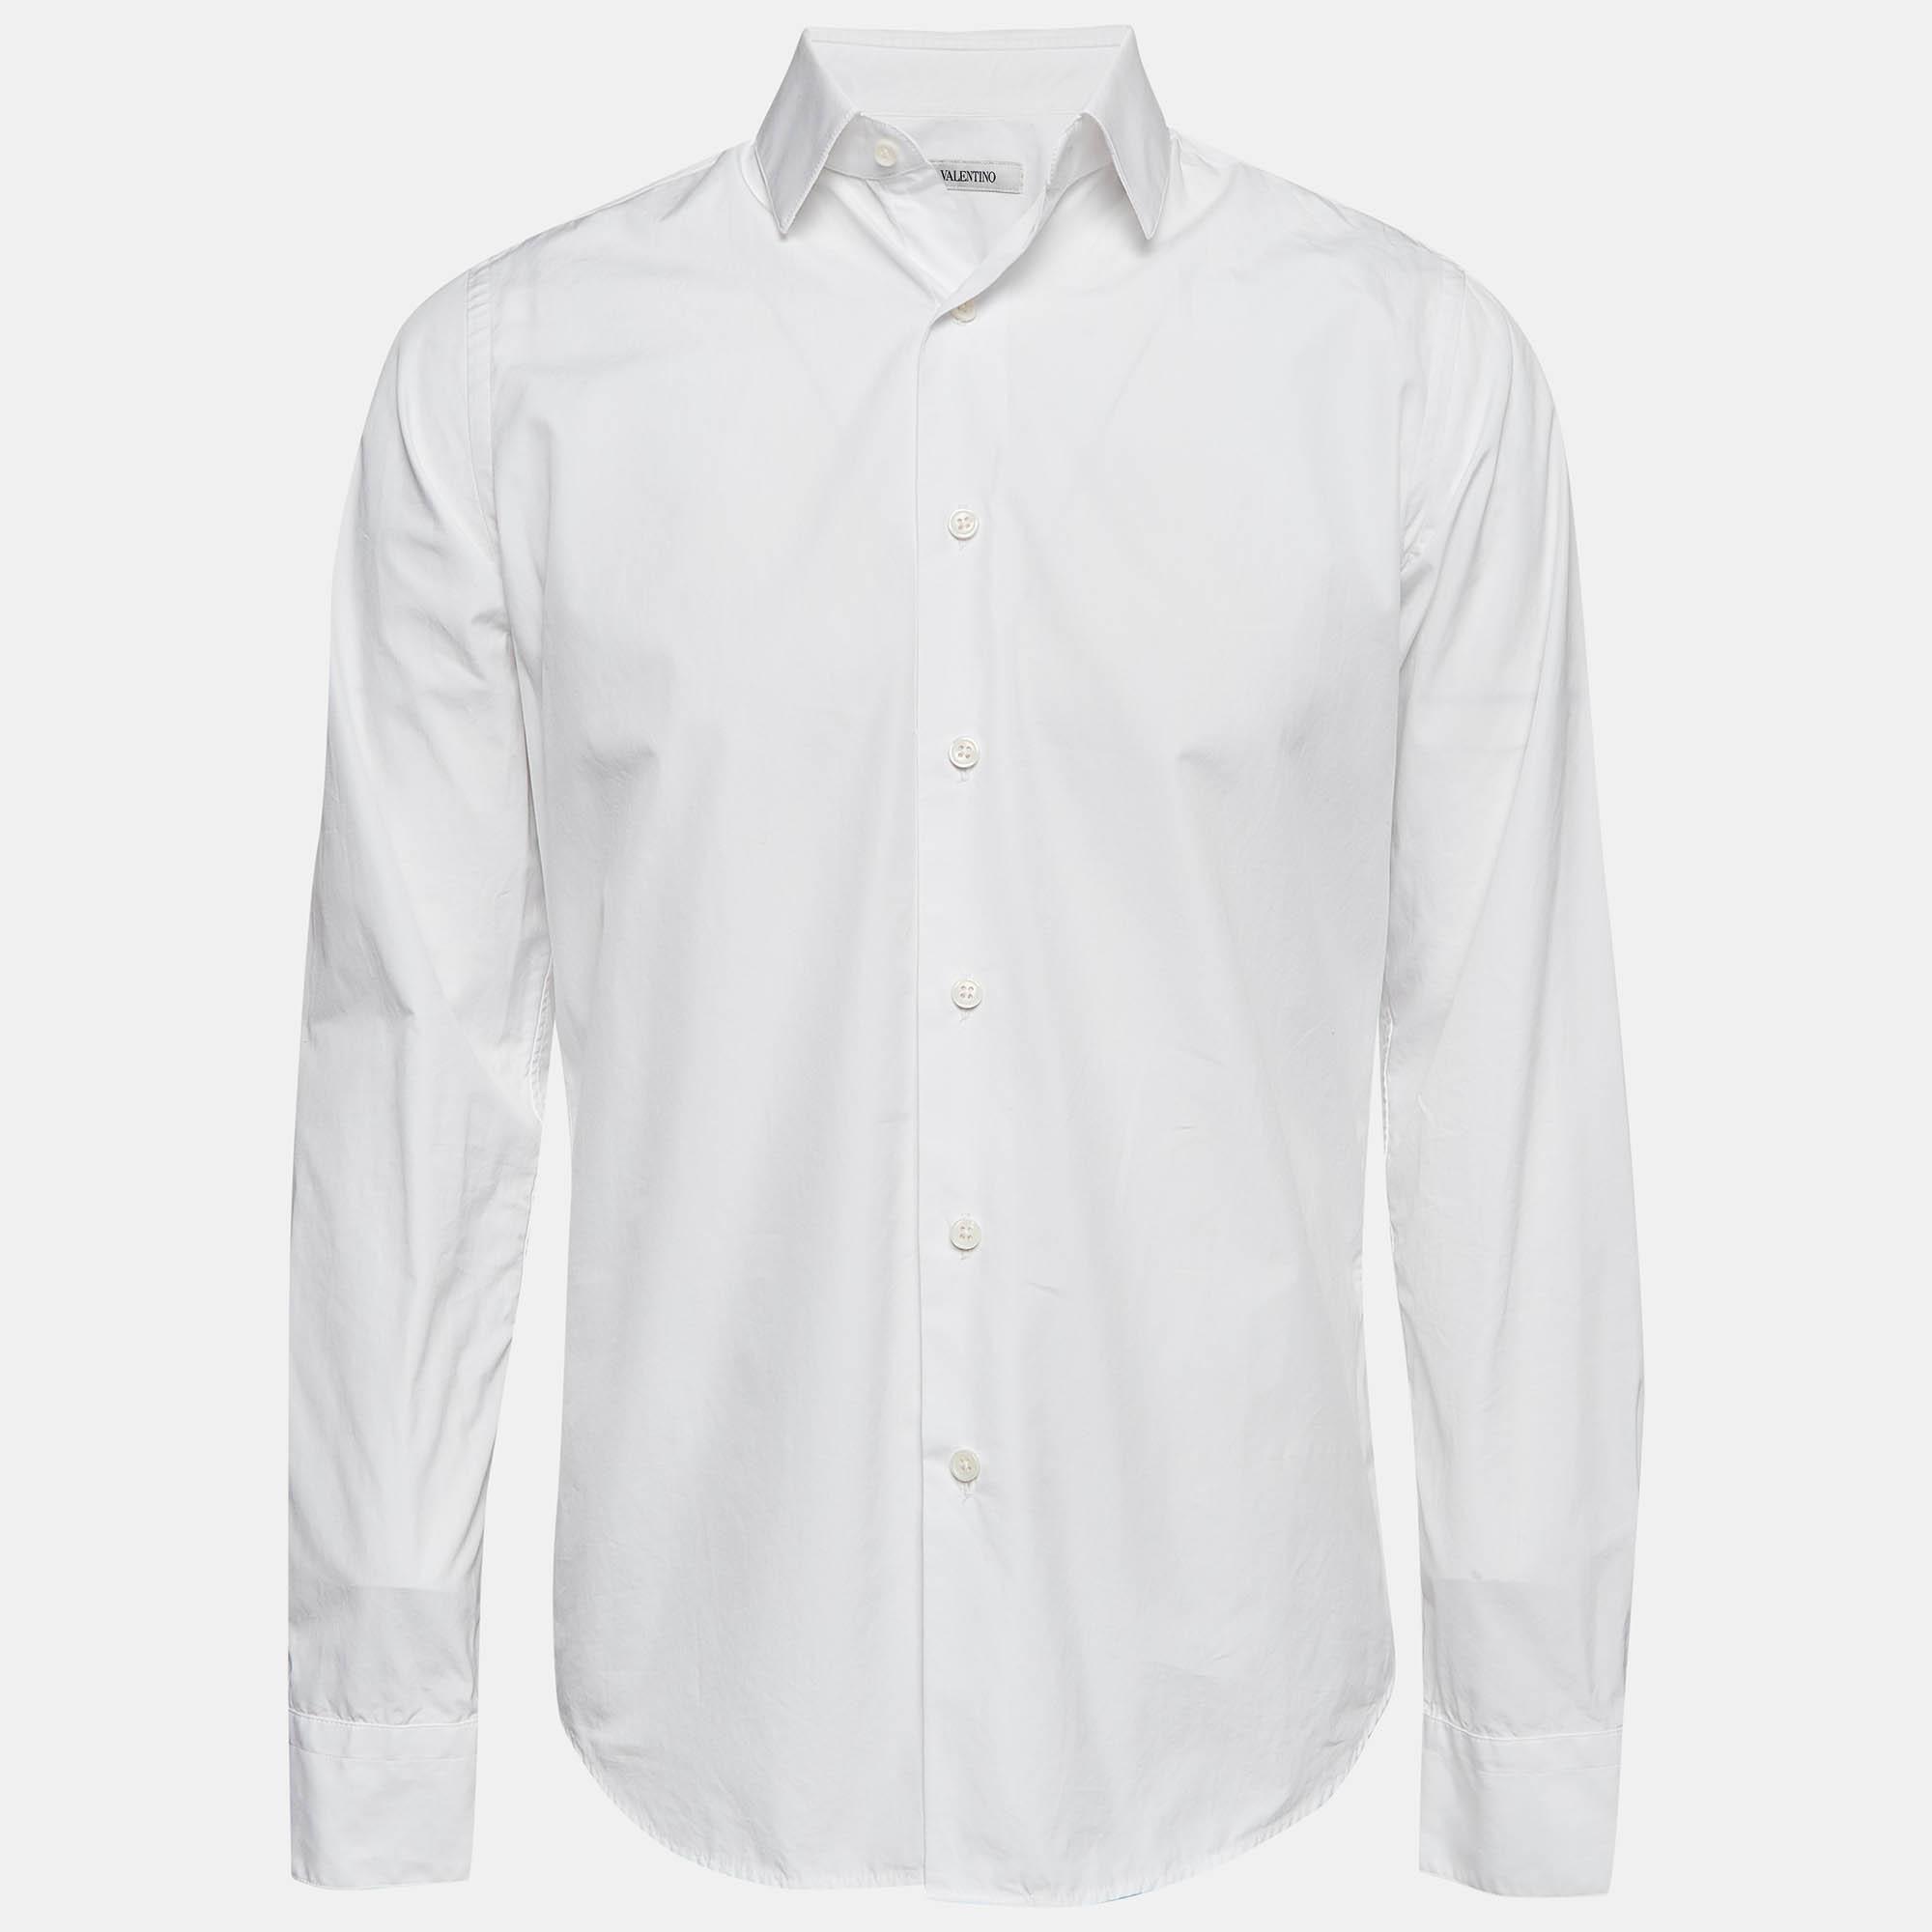 Valentino white cotton long sleeve shirt m